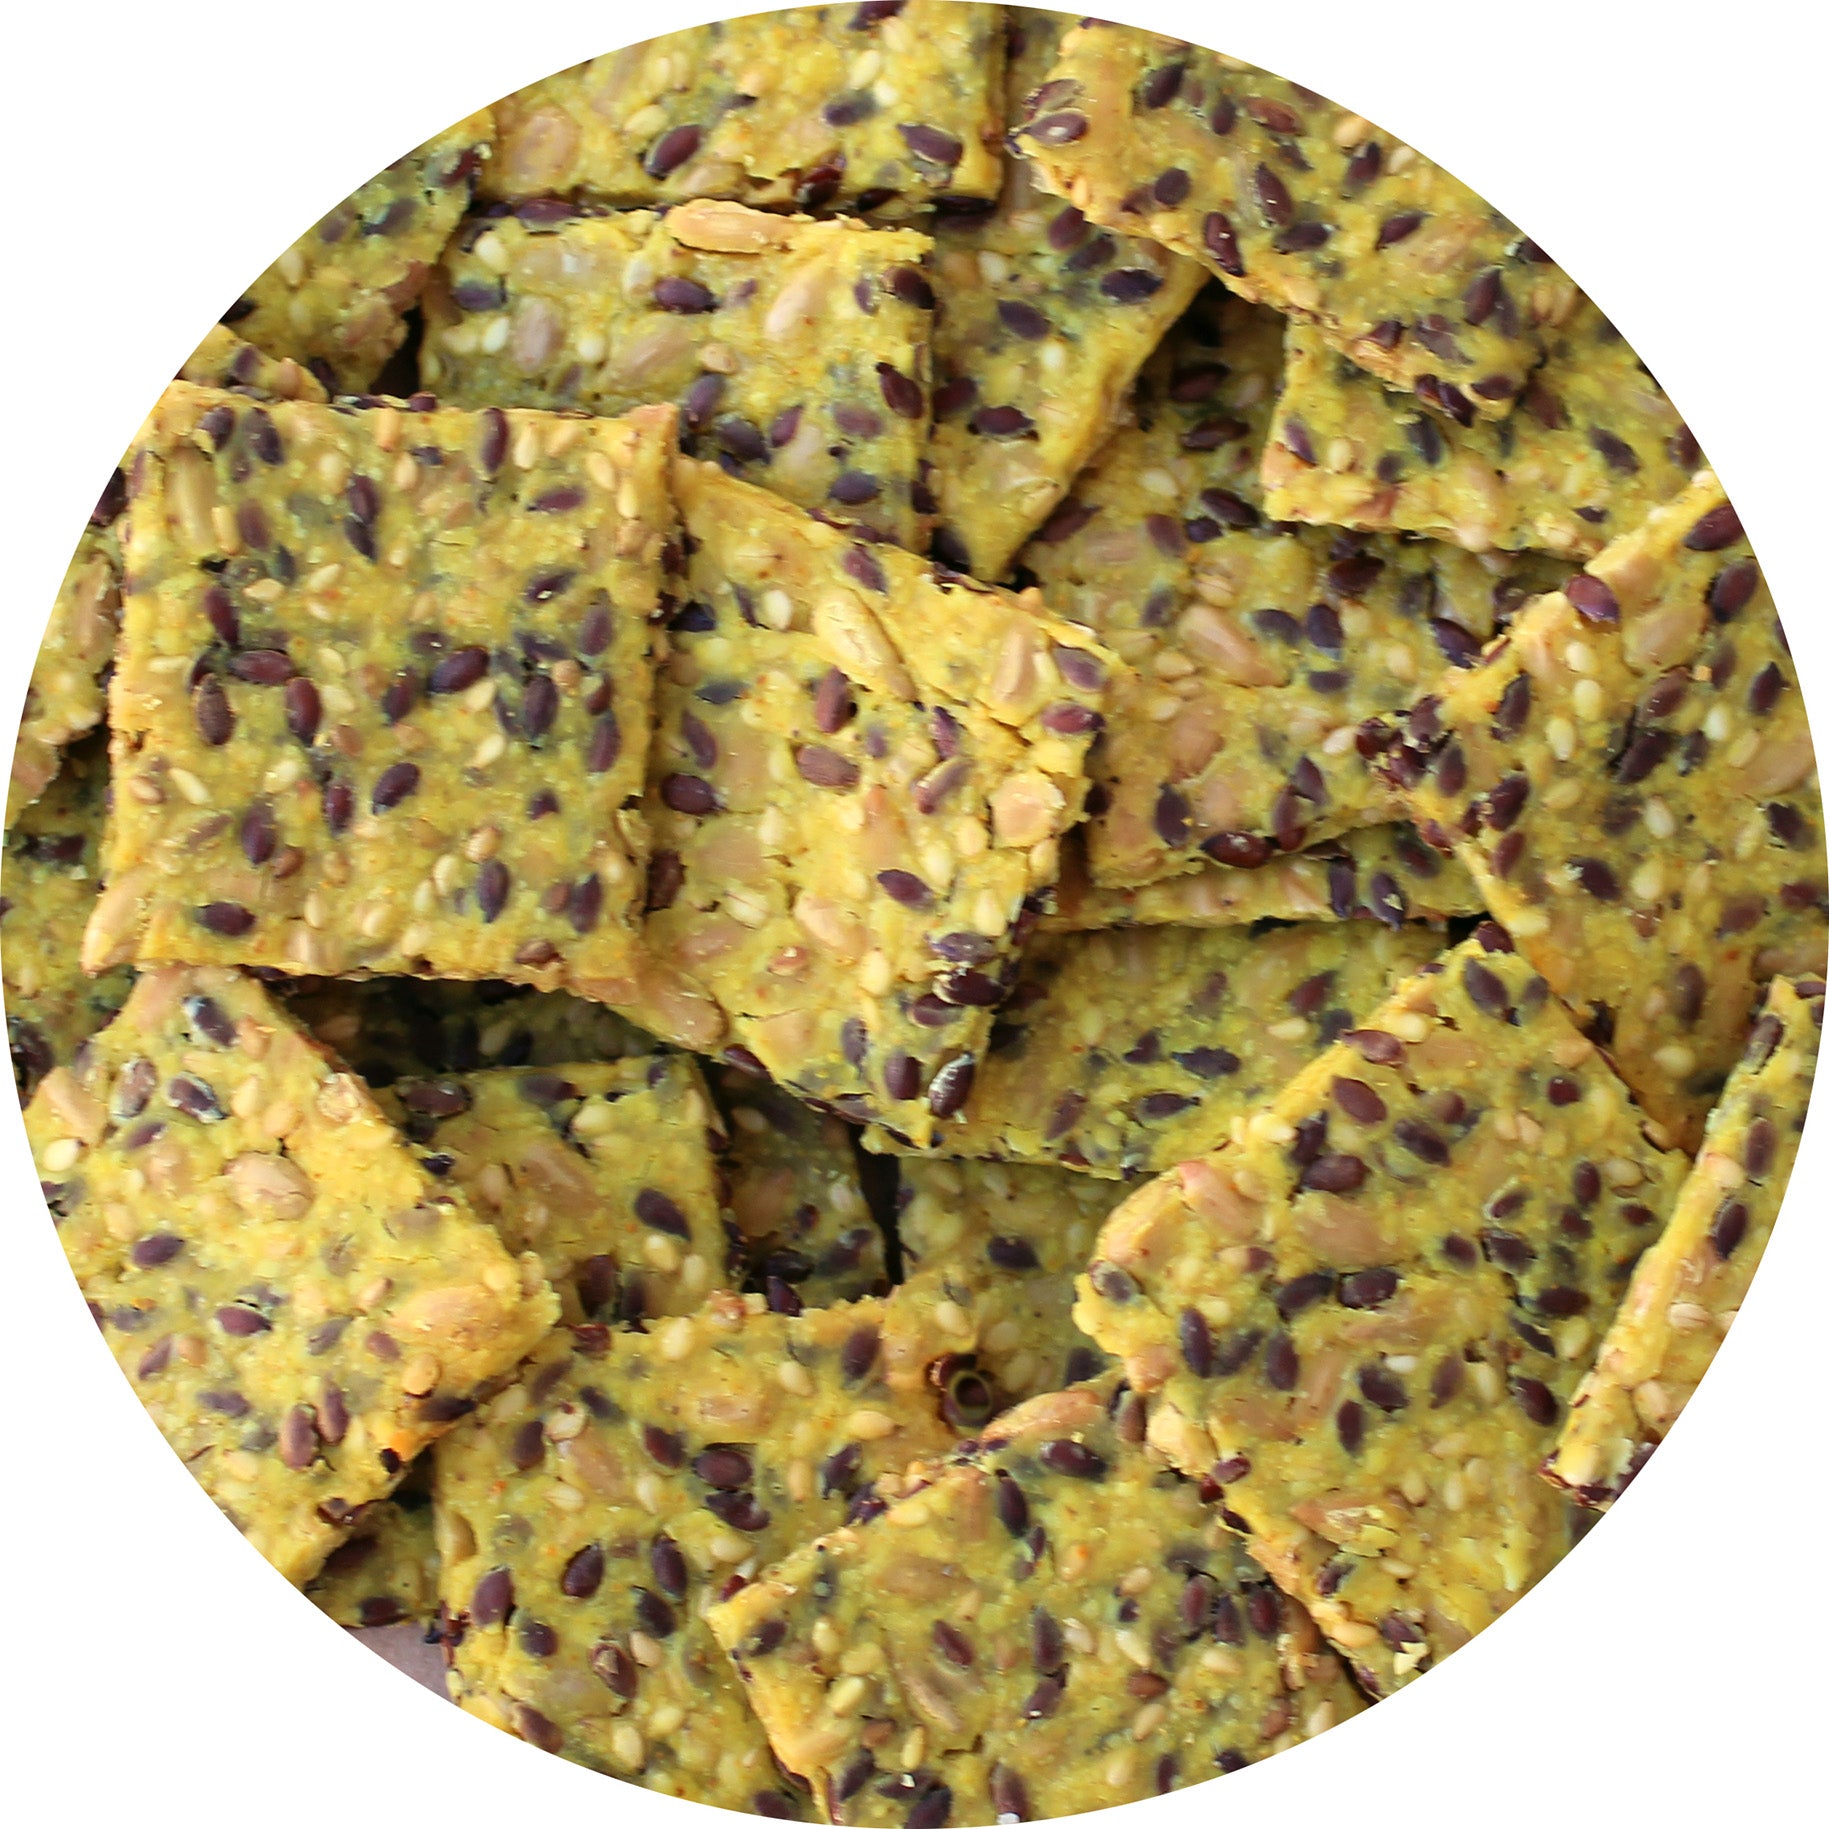 Crackers Bio au Curry Madras en poche 100 grs